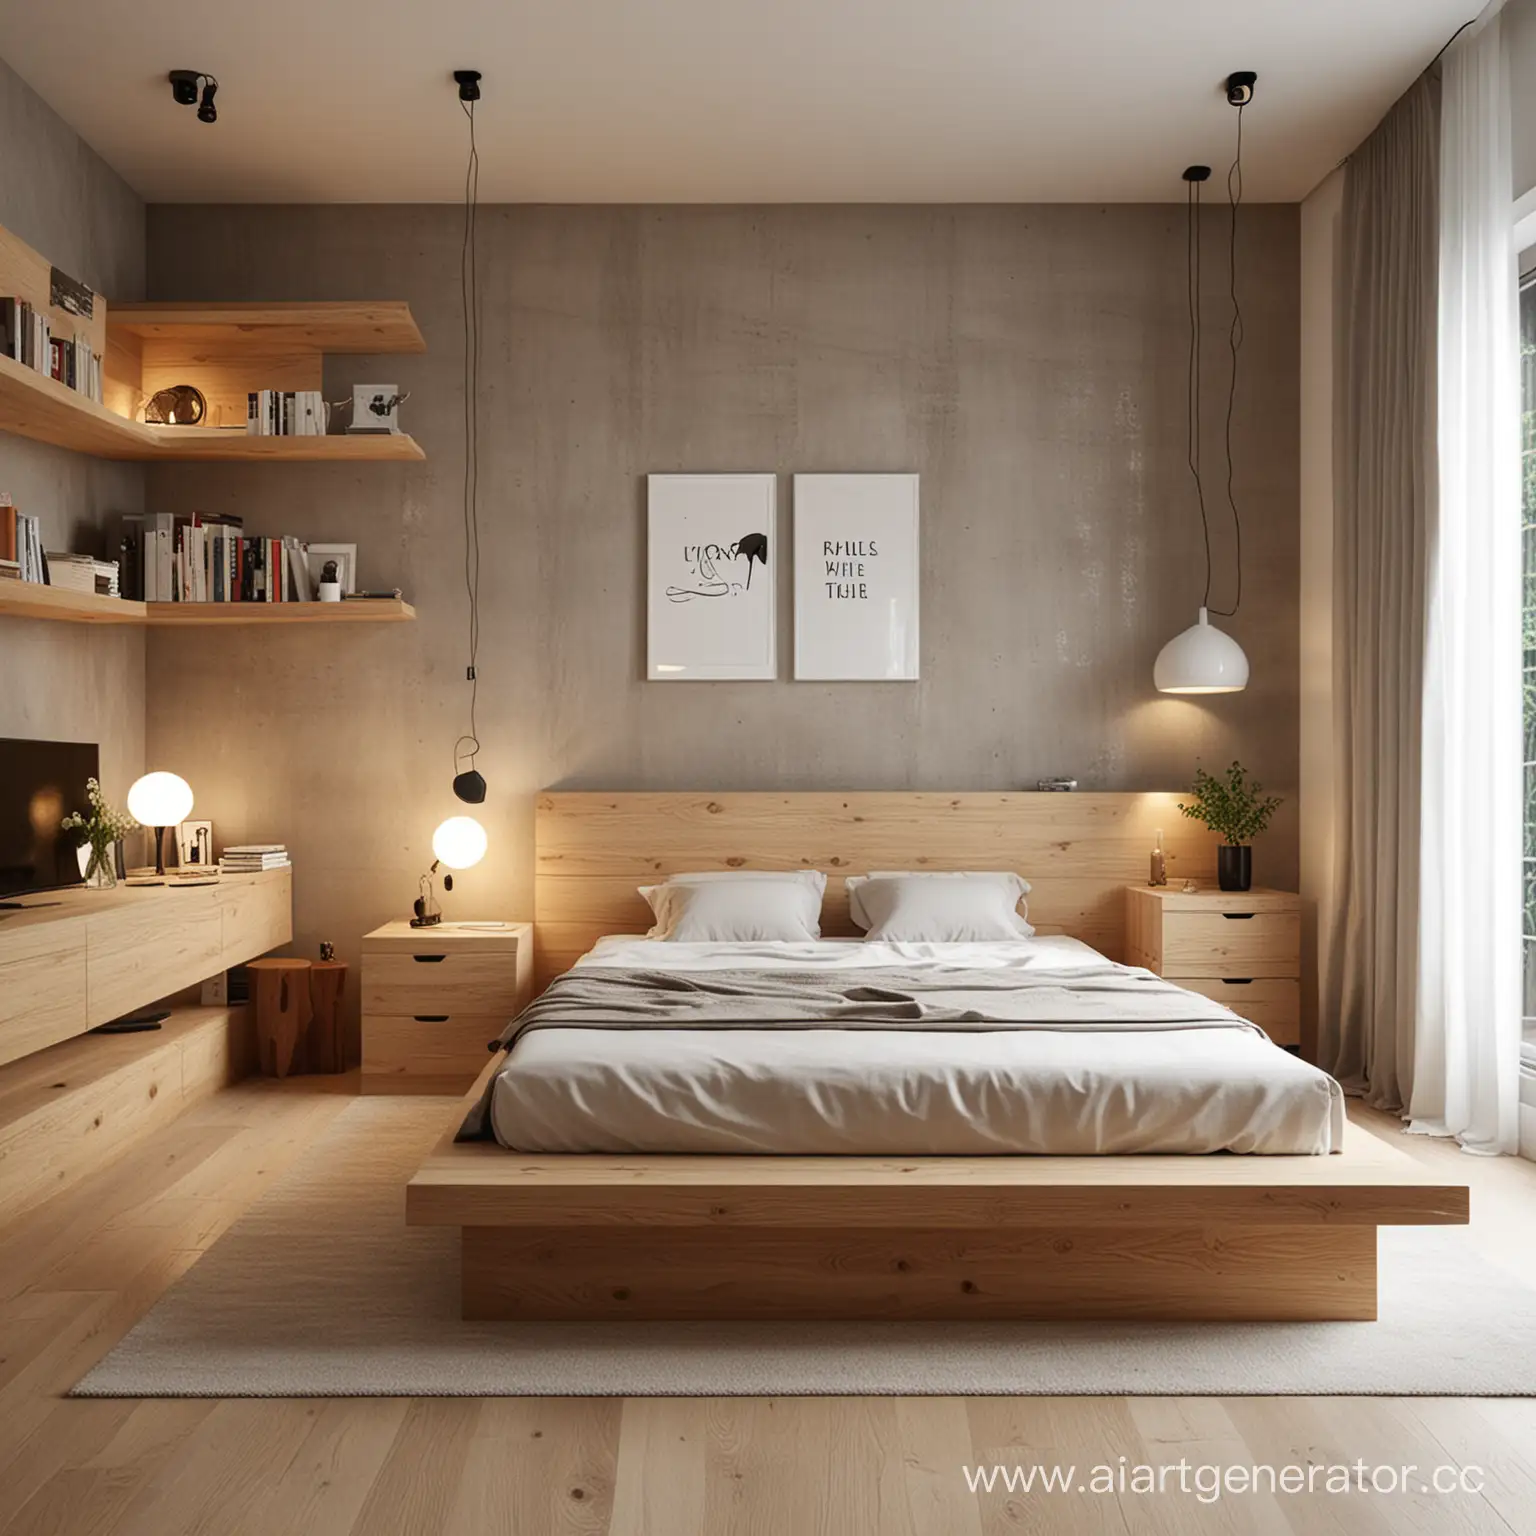 Modern-Minimalist-Living-Room-Interior-Design-with-Sleek-Furniture